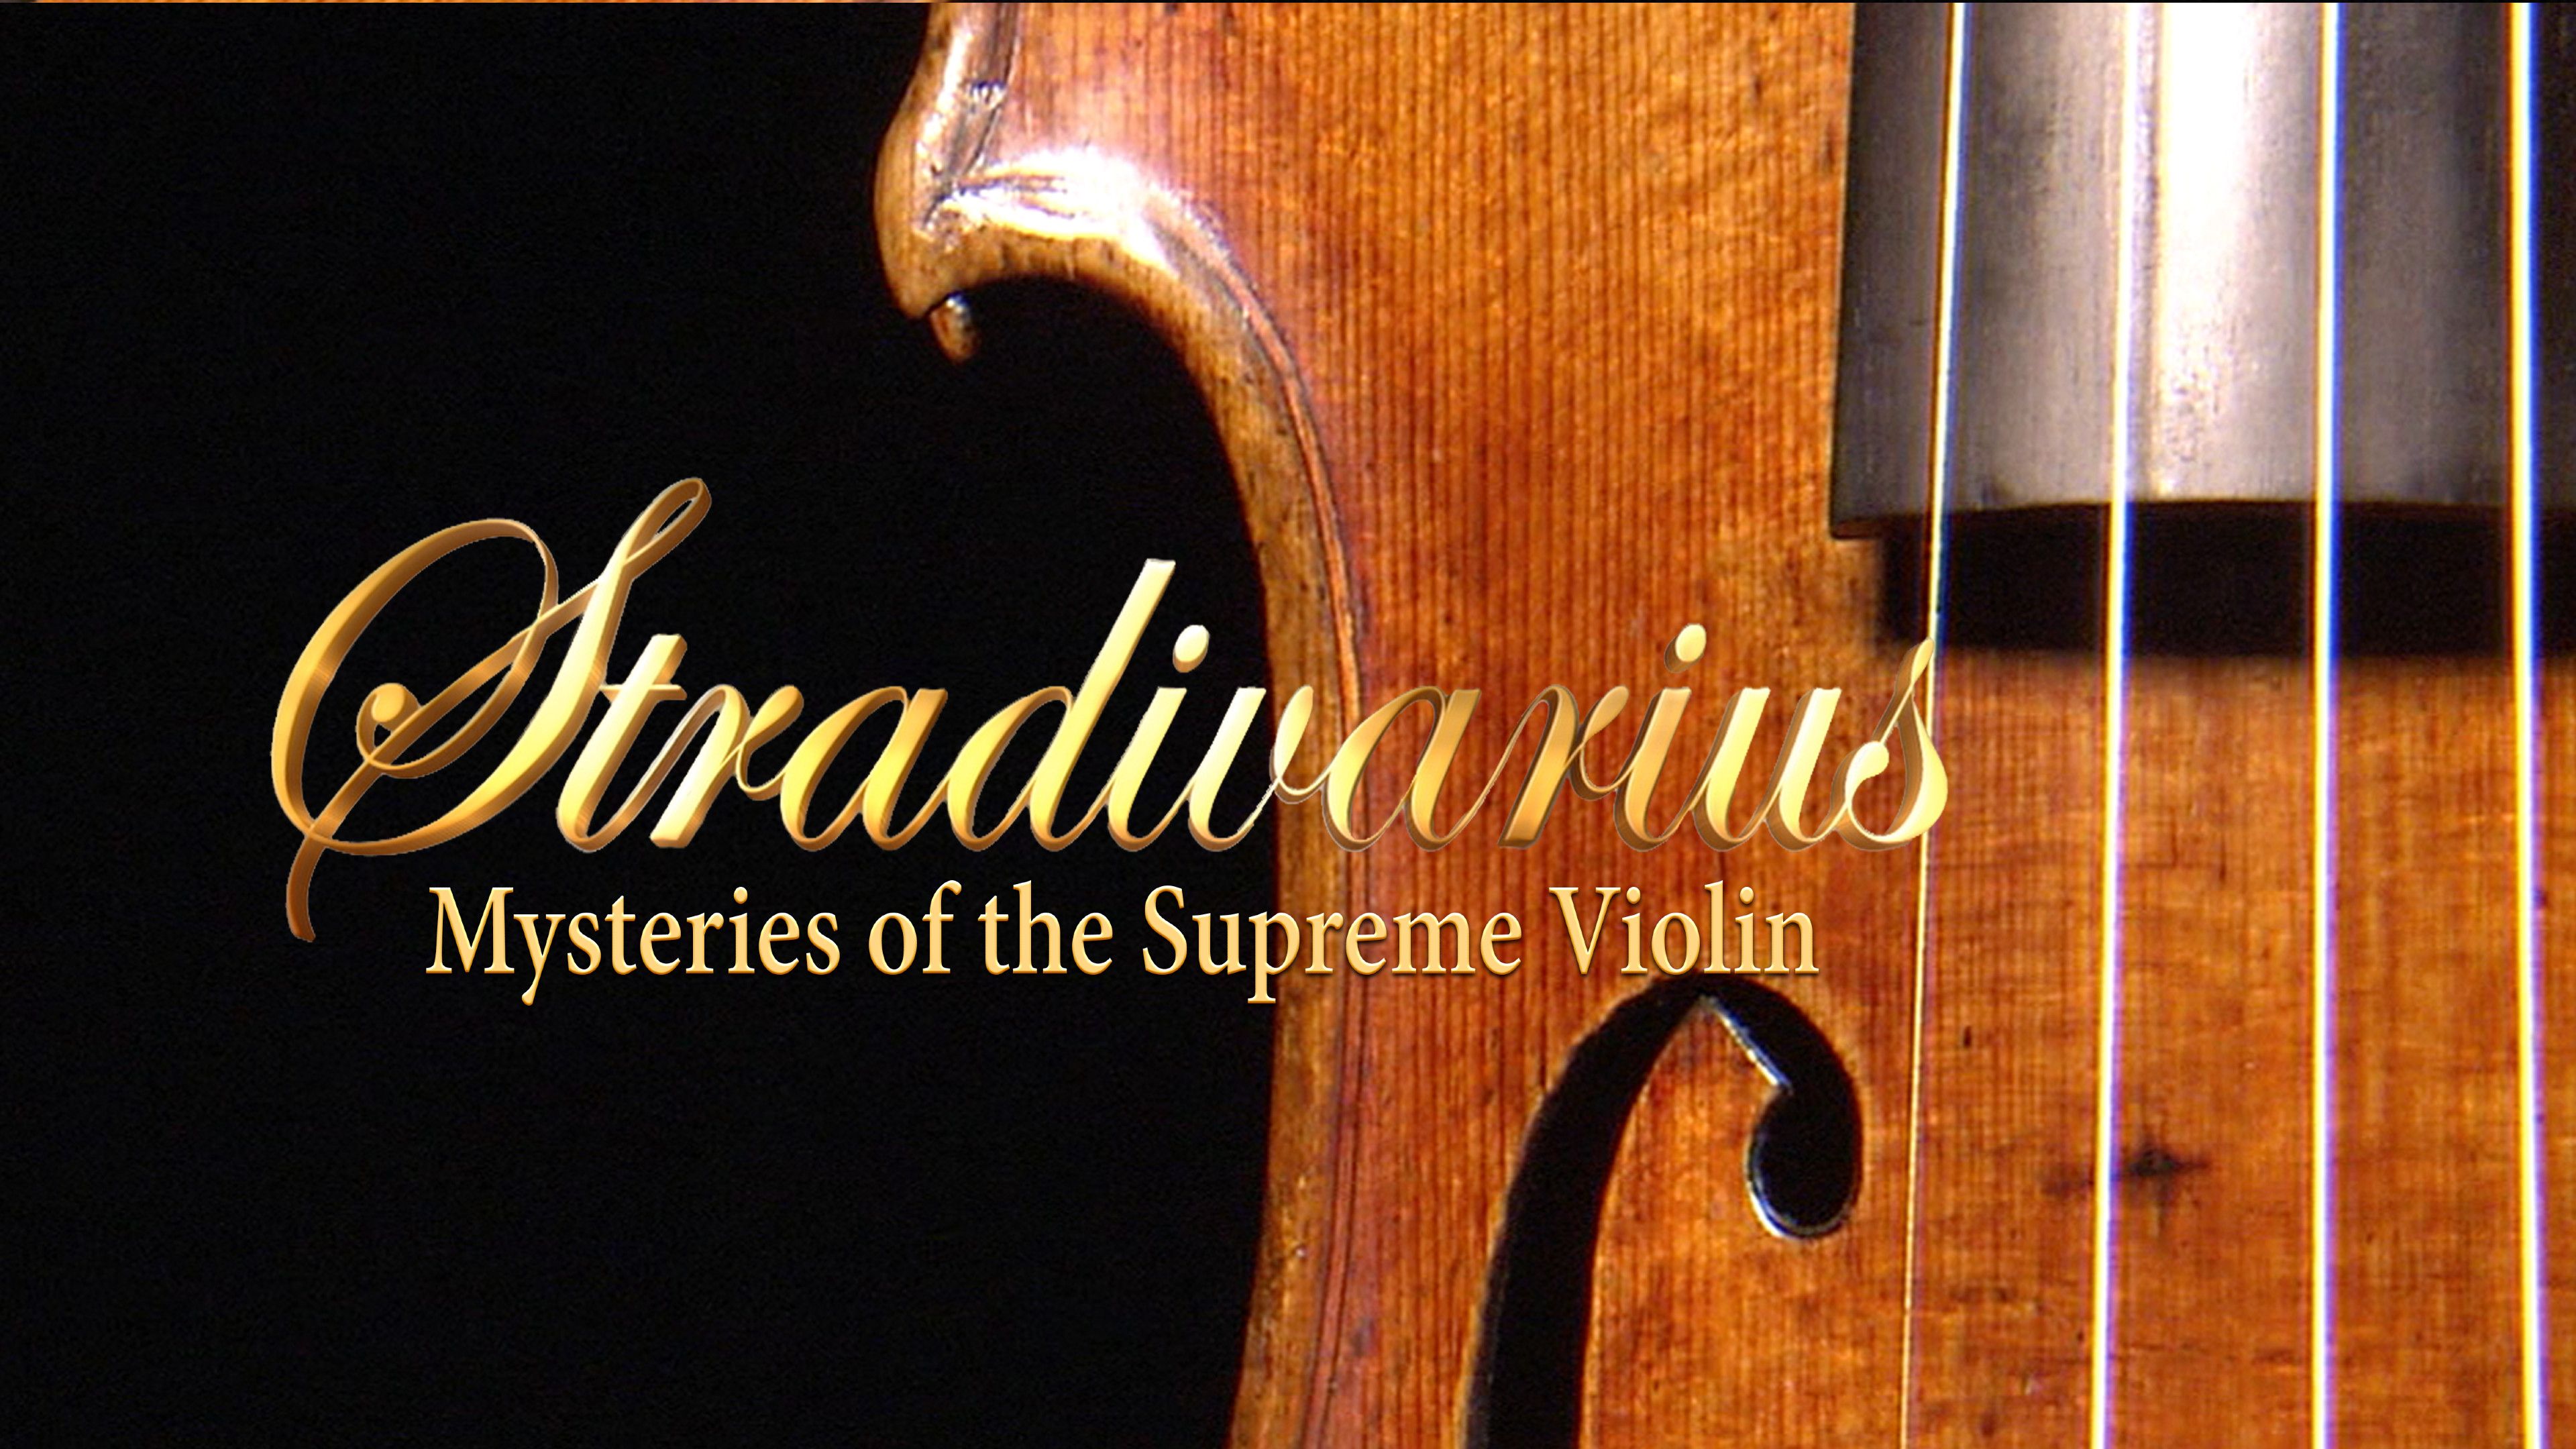 Stradivarius: Mysteries Of The Supreme Violin